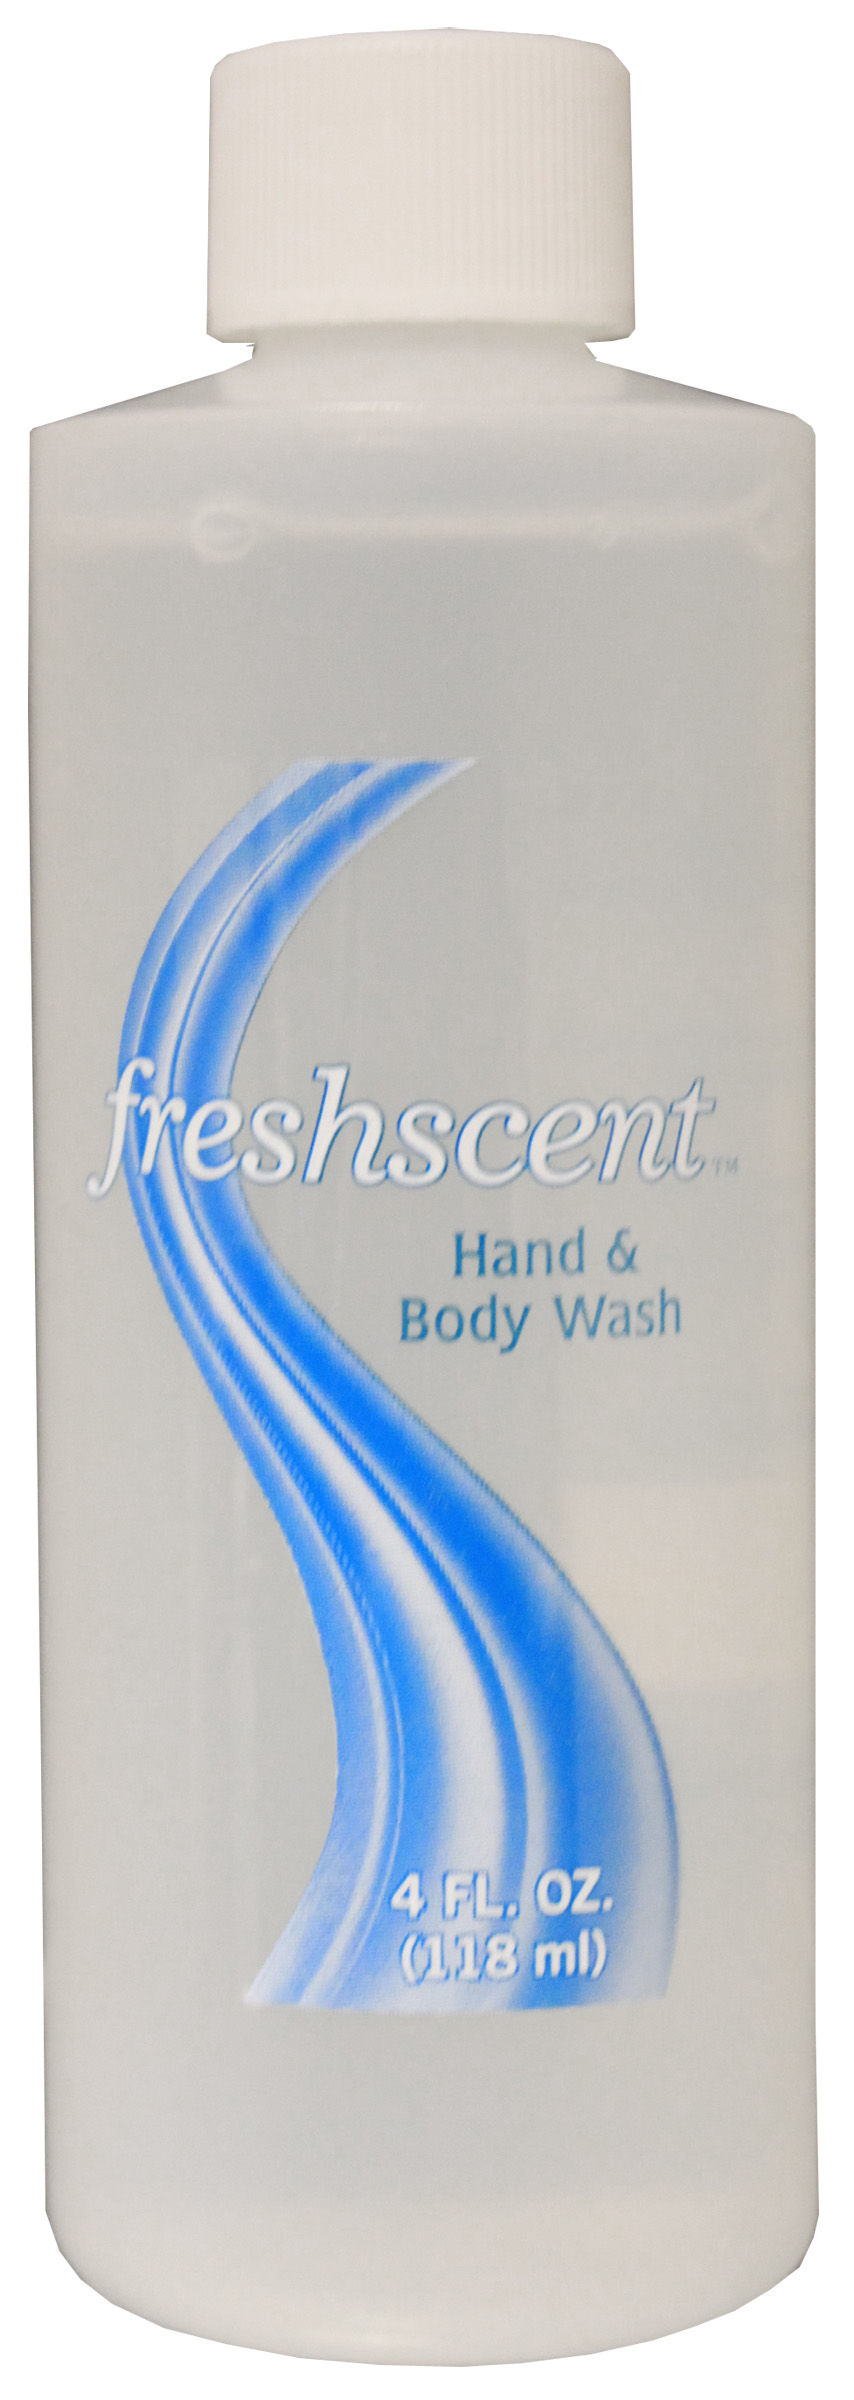 Freshscent 4 oz. Hand & Body Wash